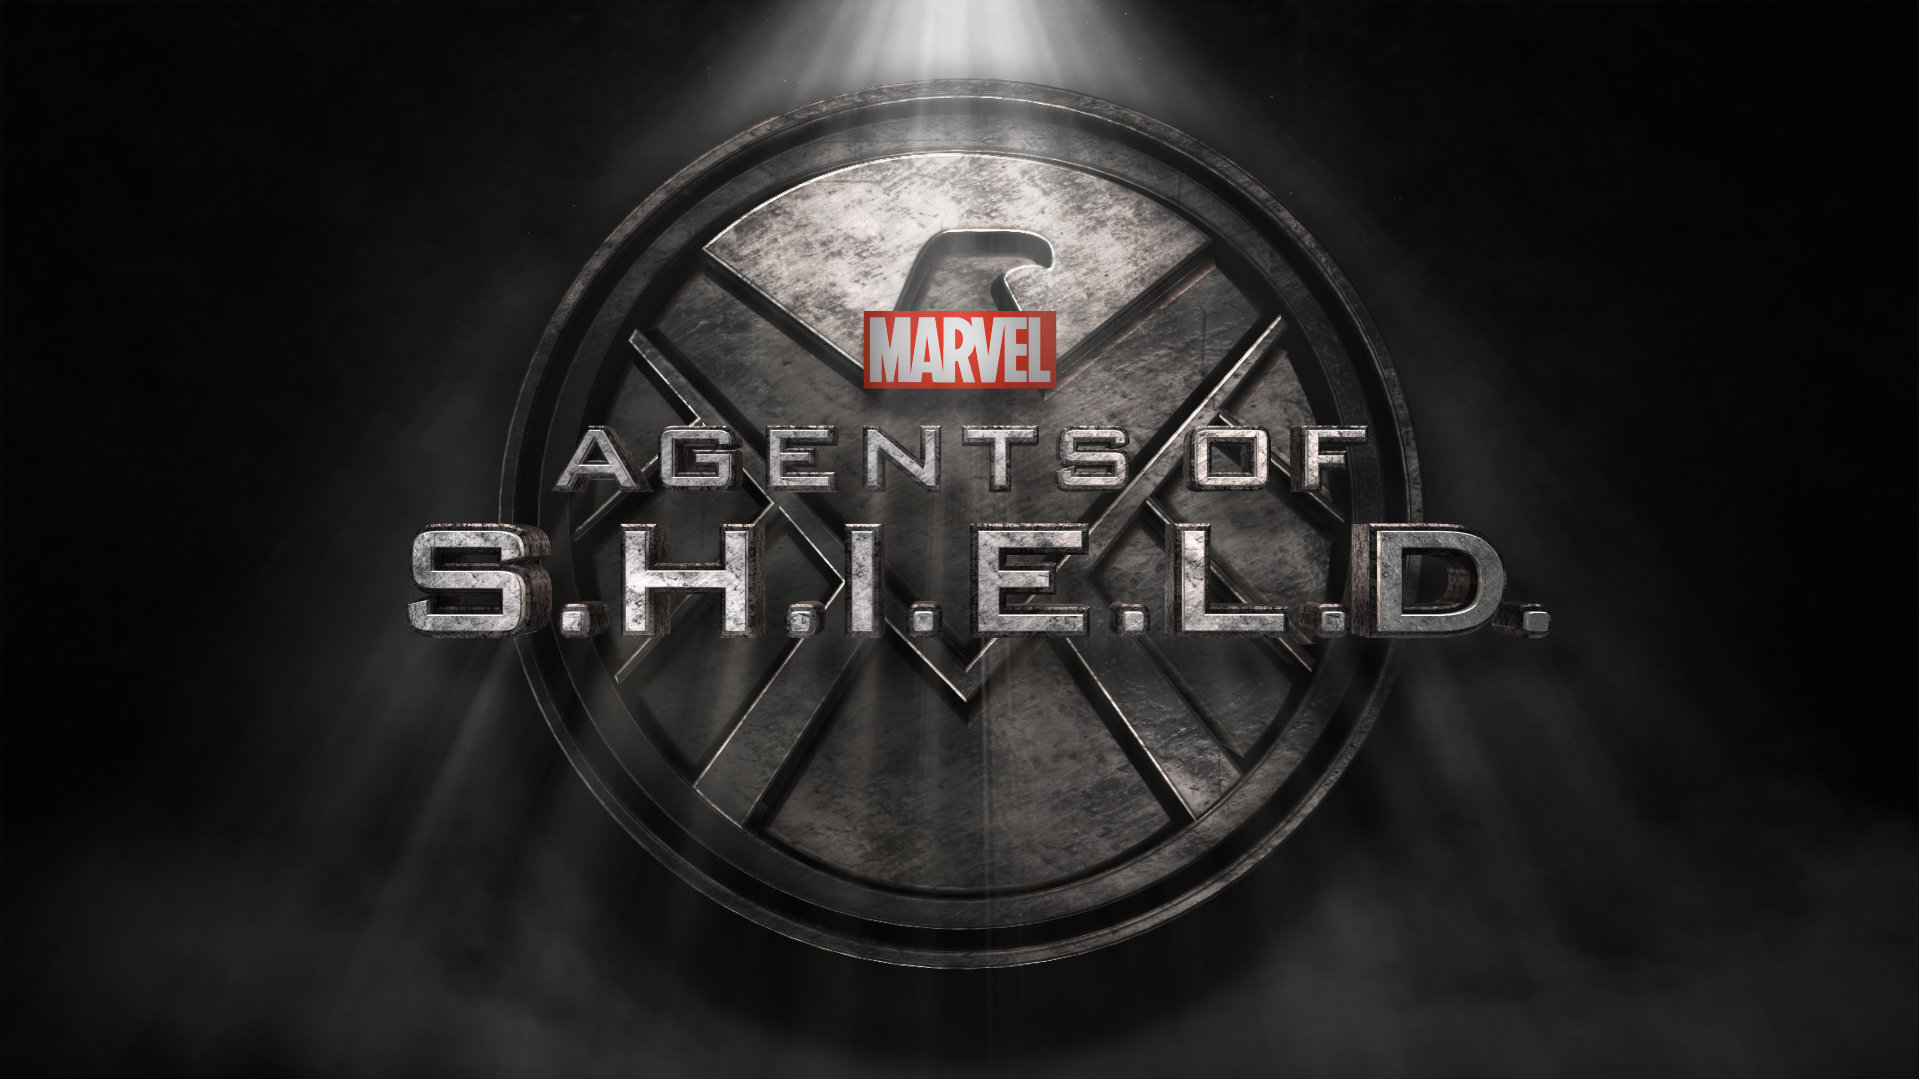 Agents of shield wallpaper